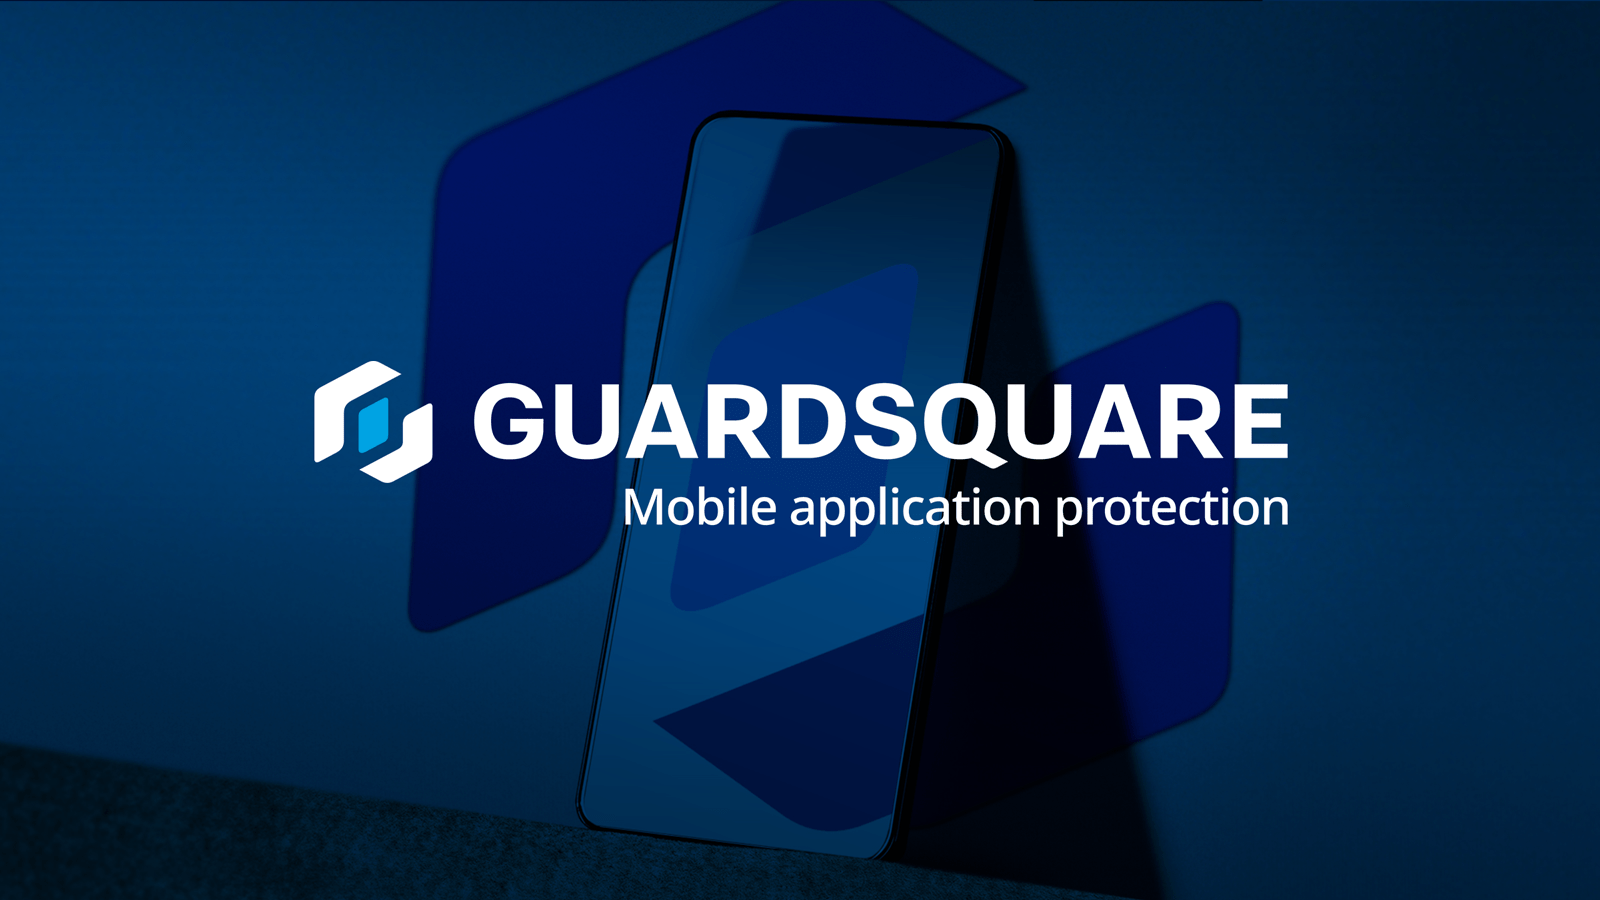 (c) Guardsquare.com